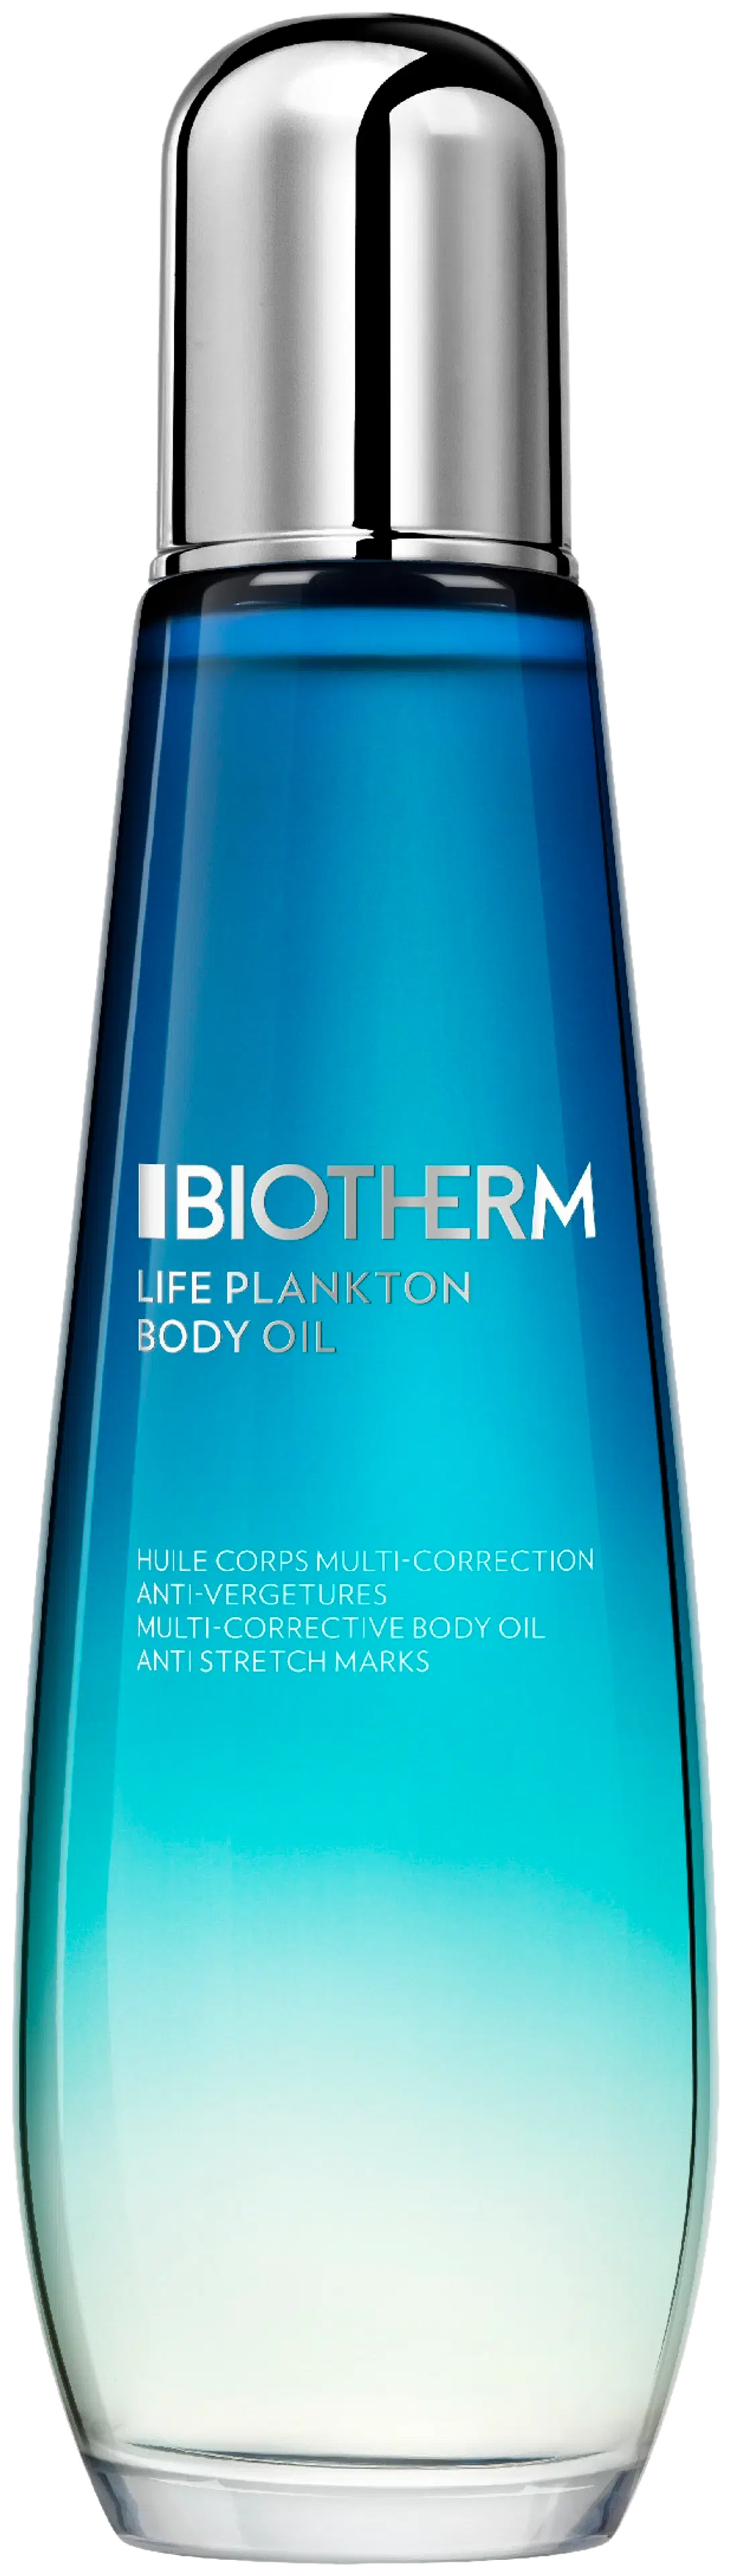 Biotherm Life Plankton Body Oil vartaloöljy 125 ml